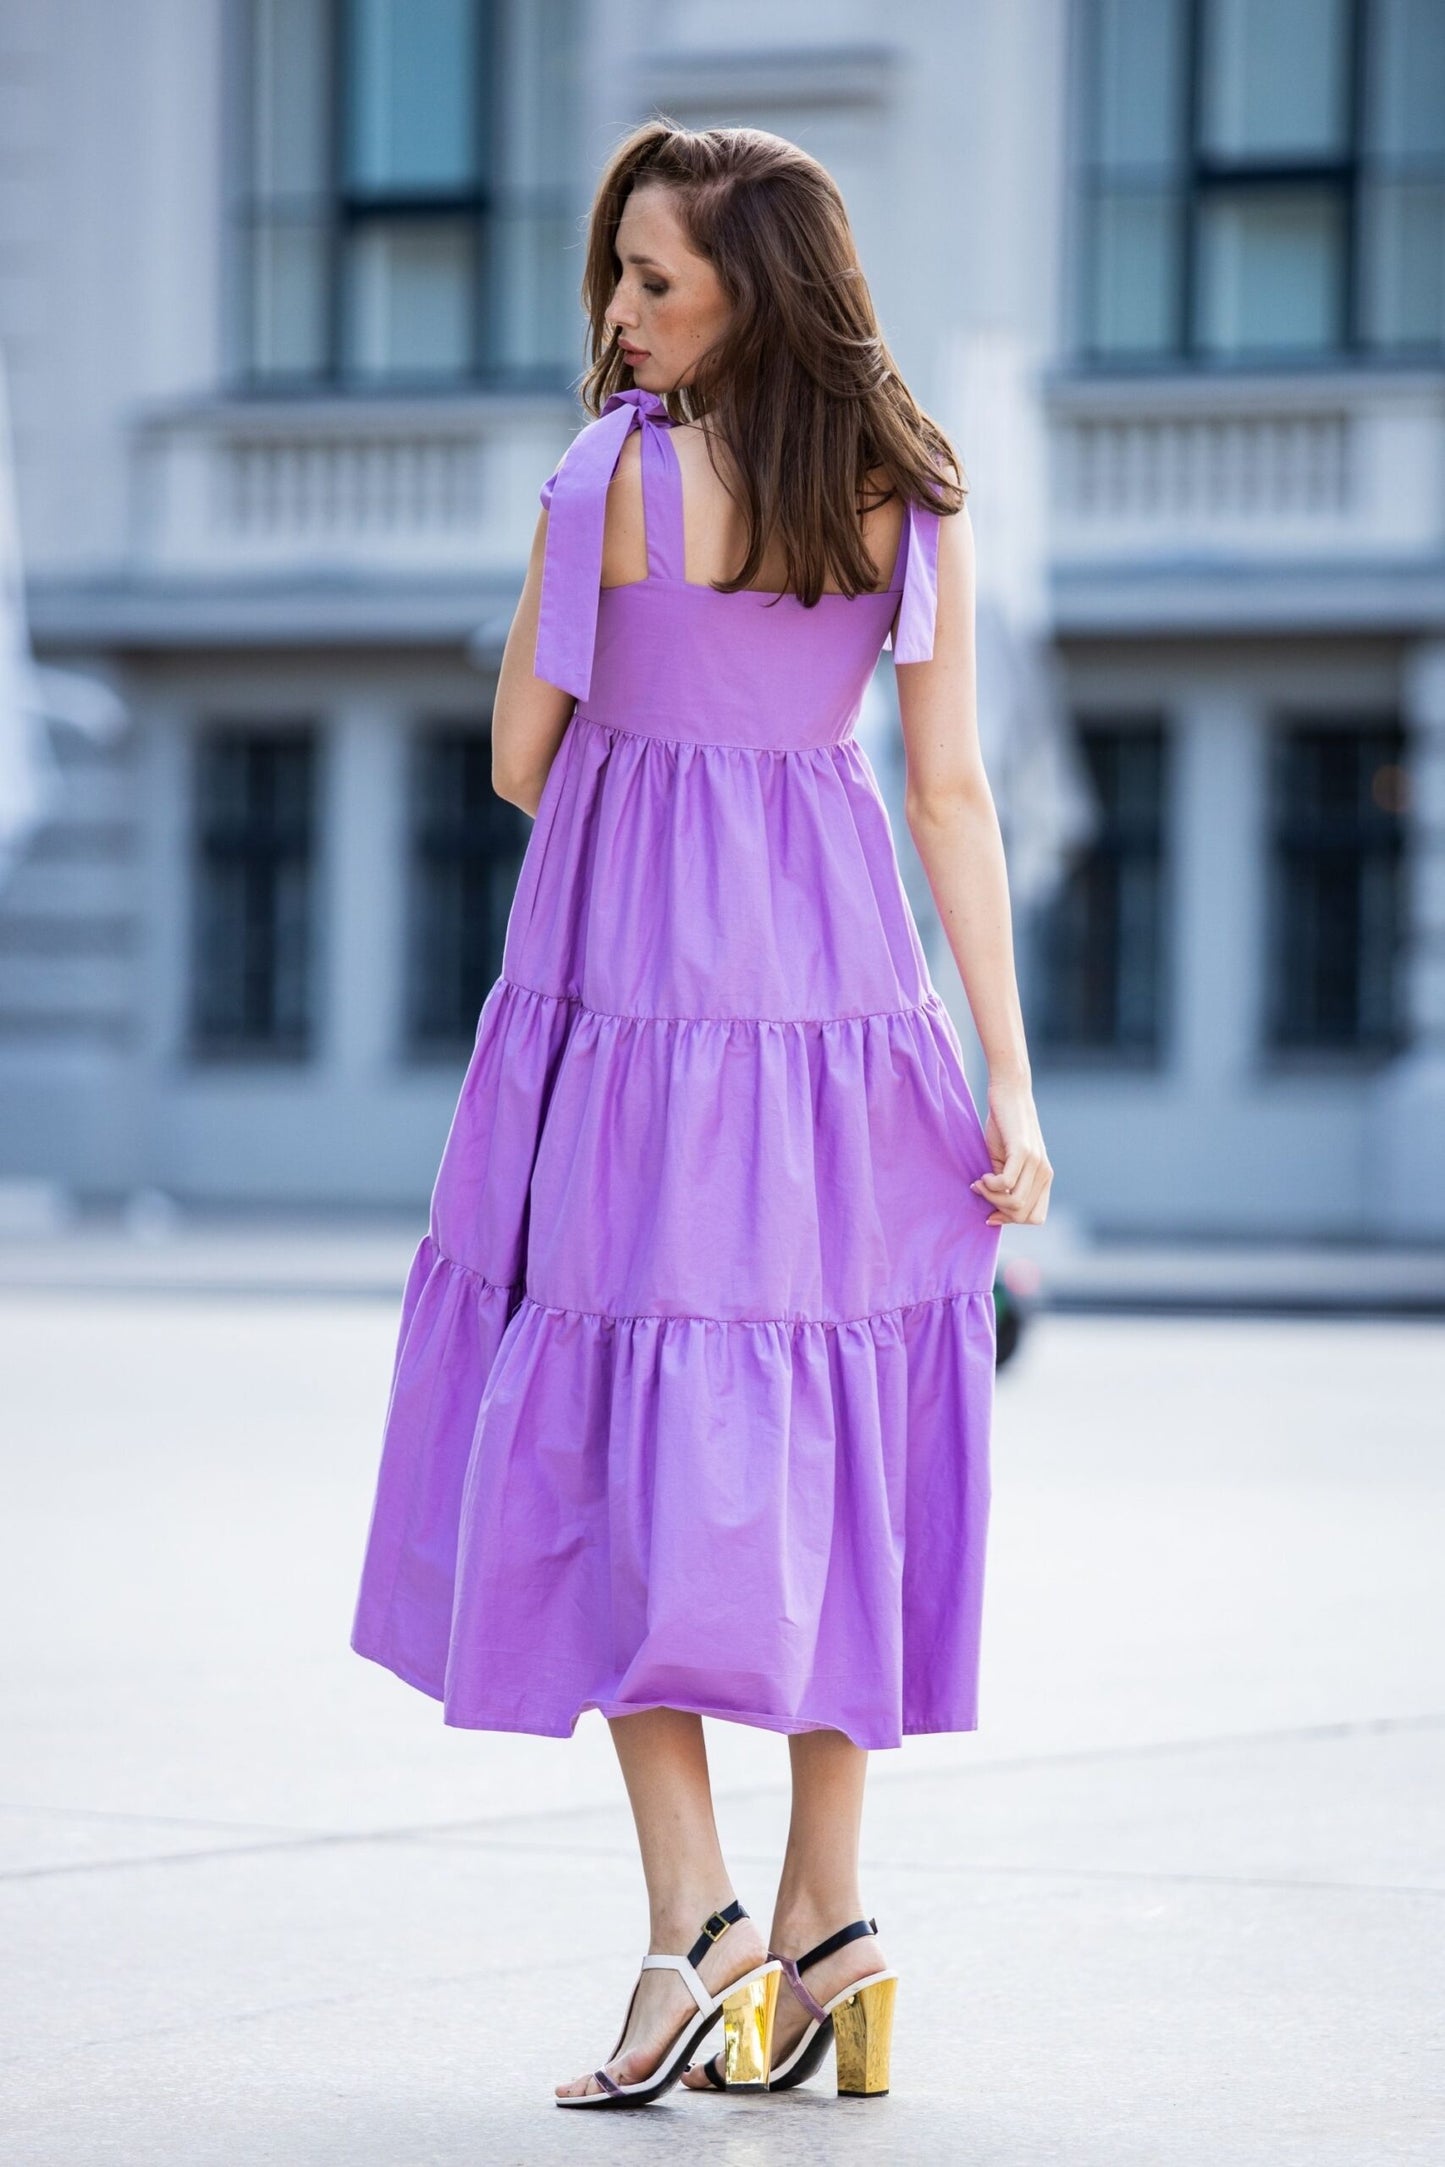 Purple cotton dress with bows